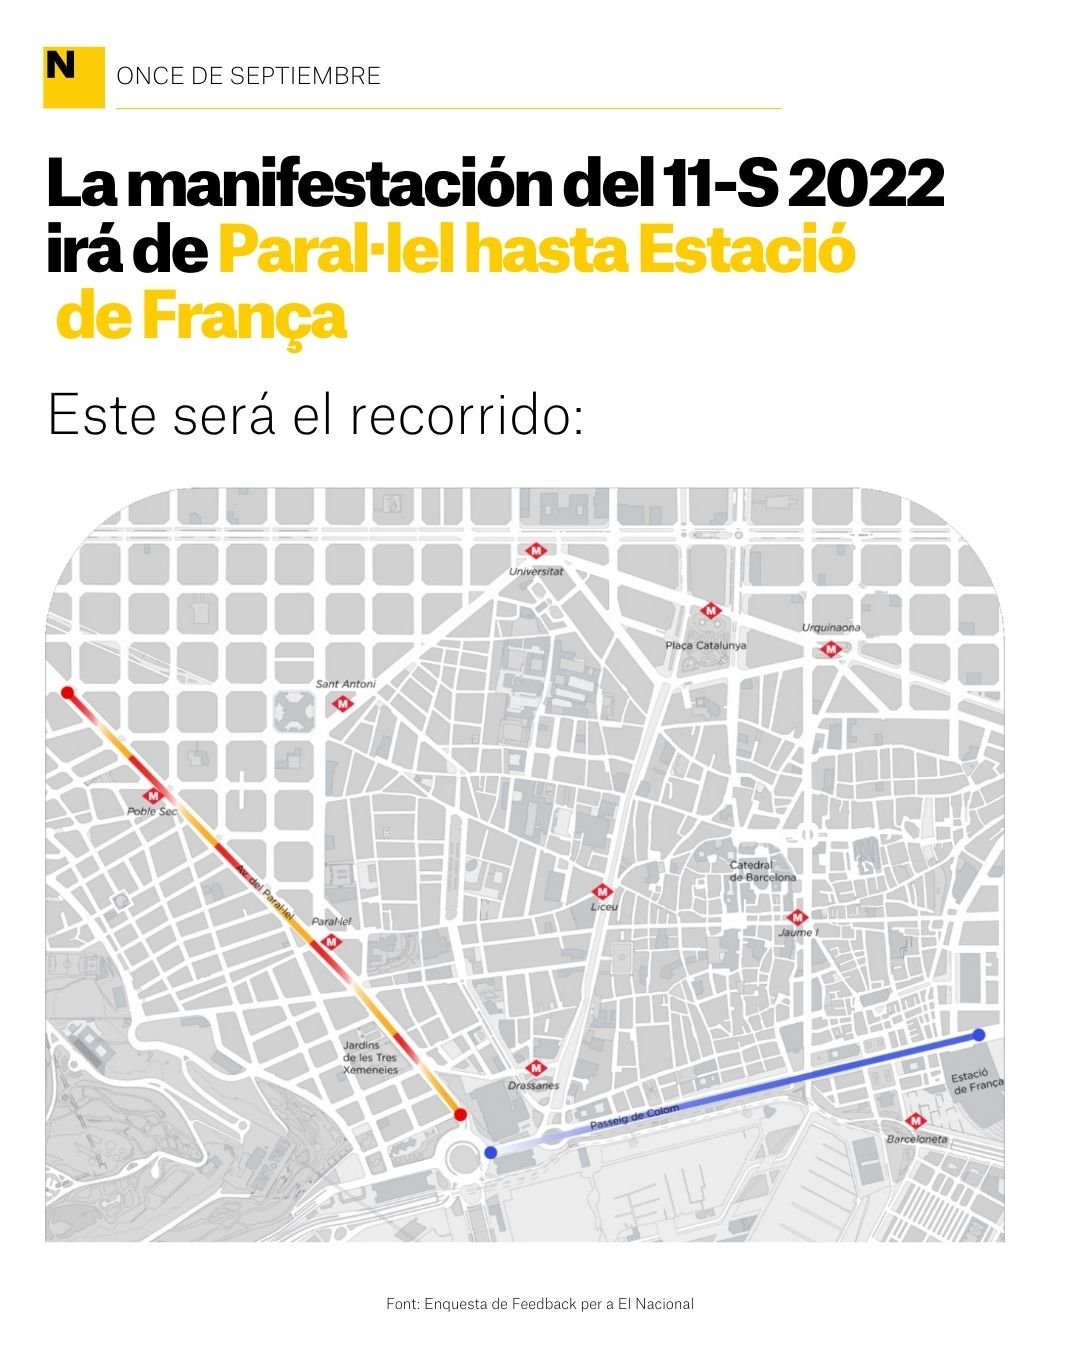 mapa manifestacion anc diada 2022 11 septiembre barcelona